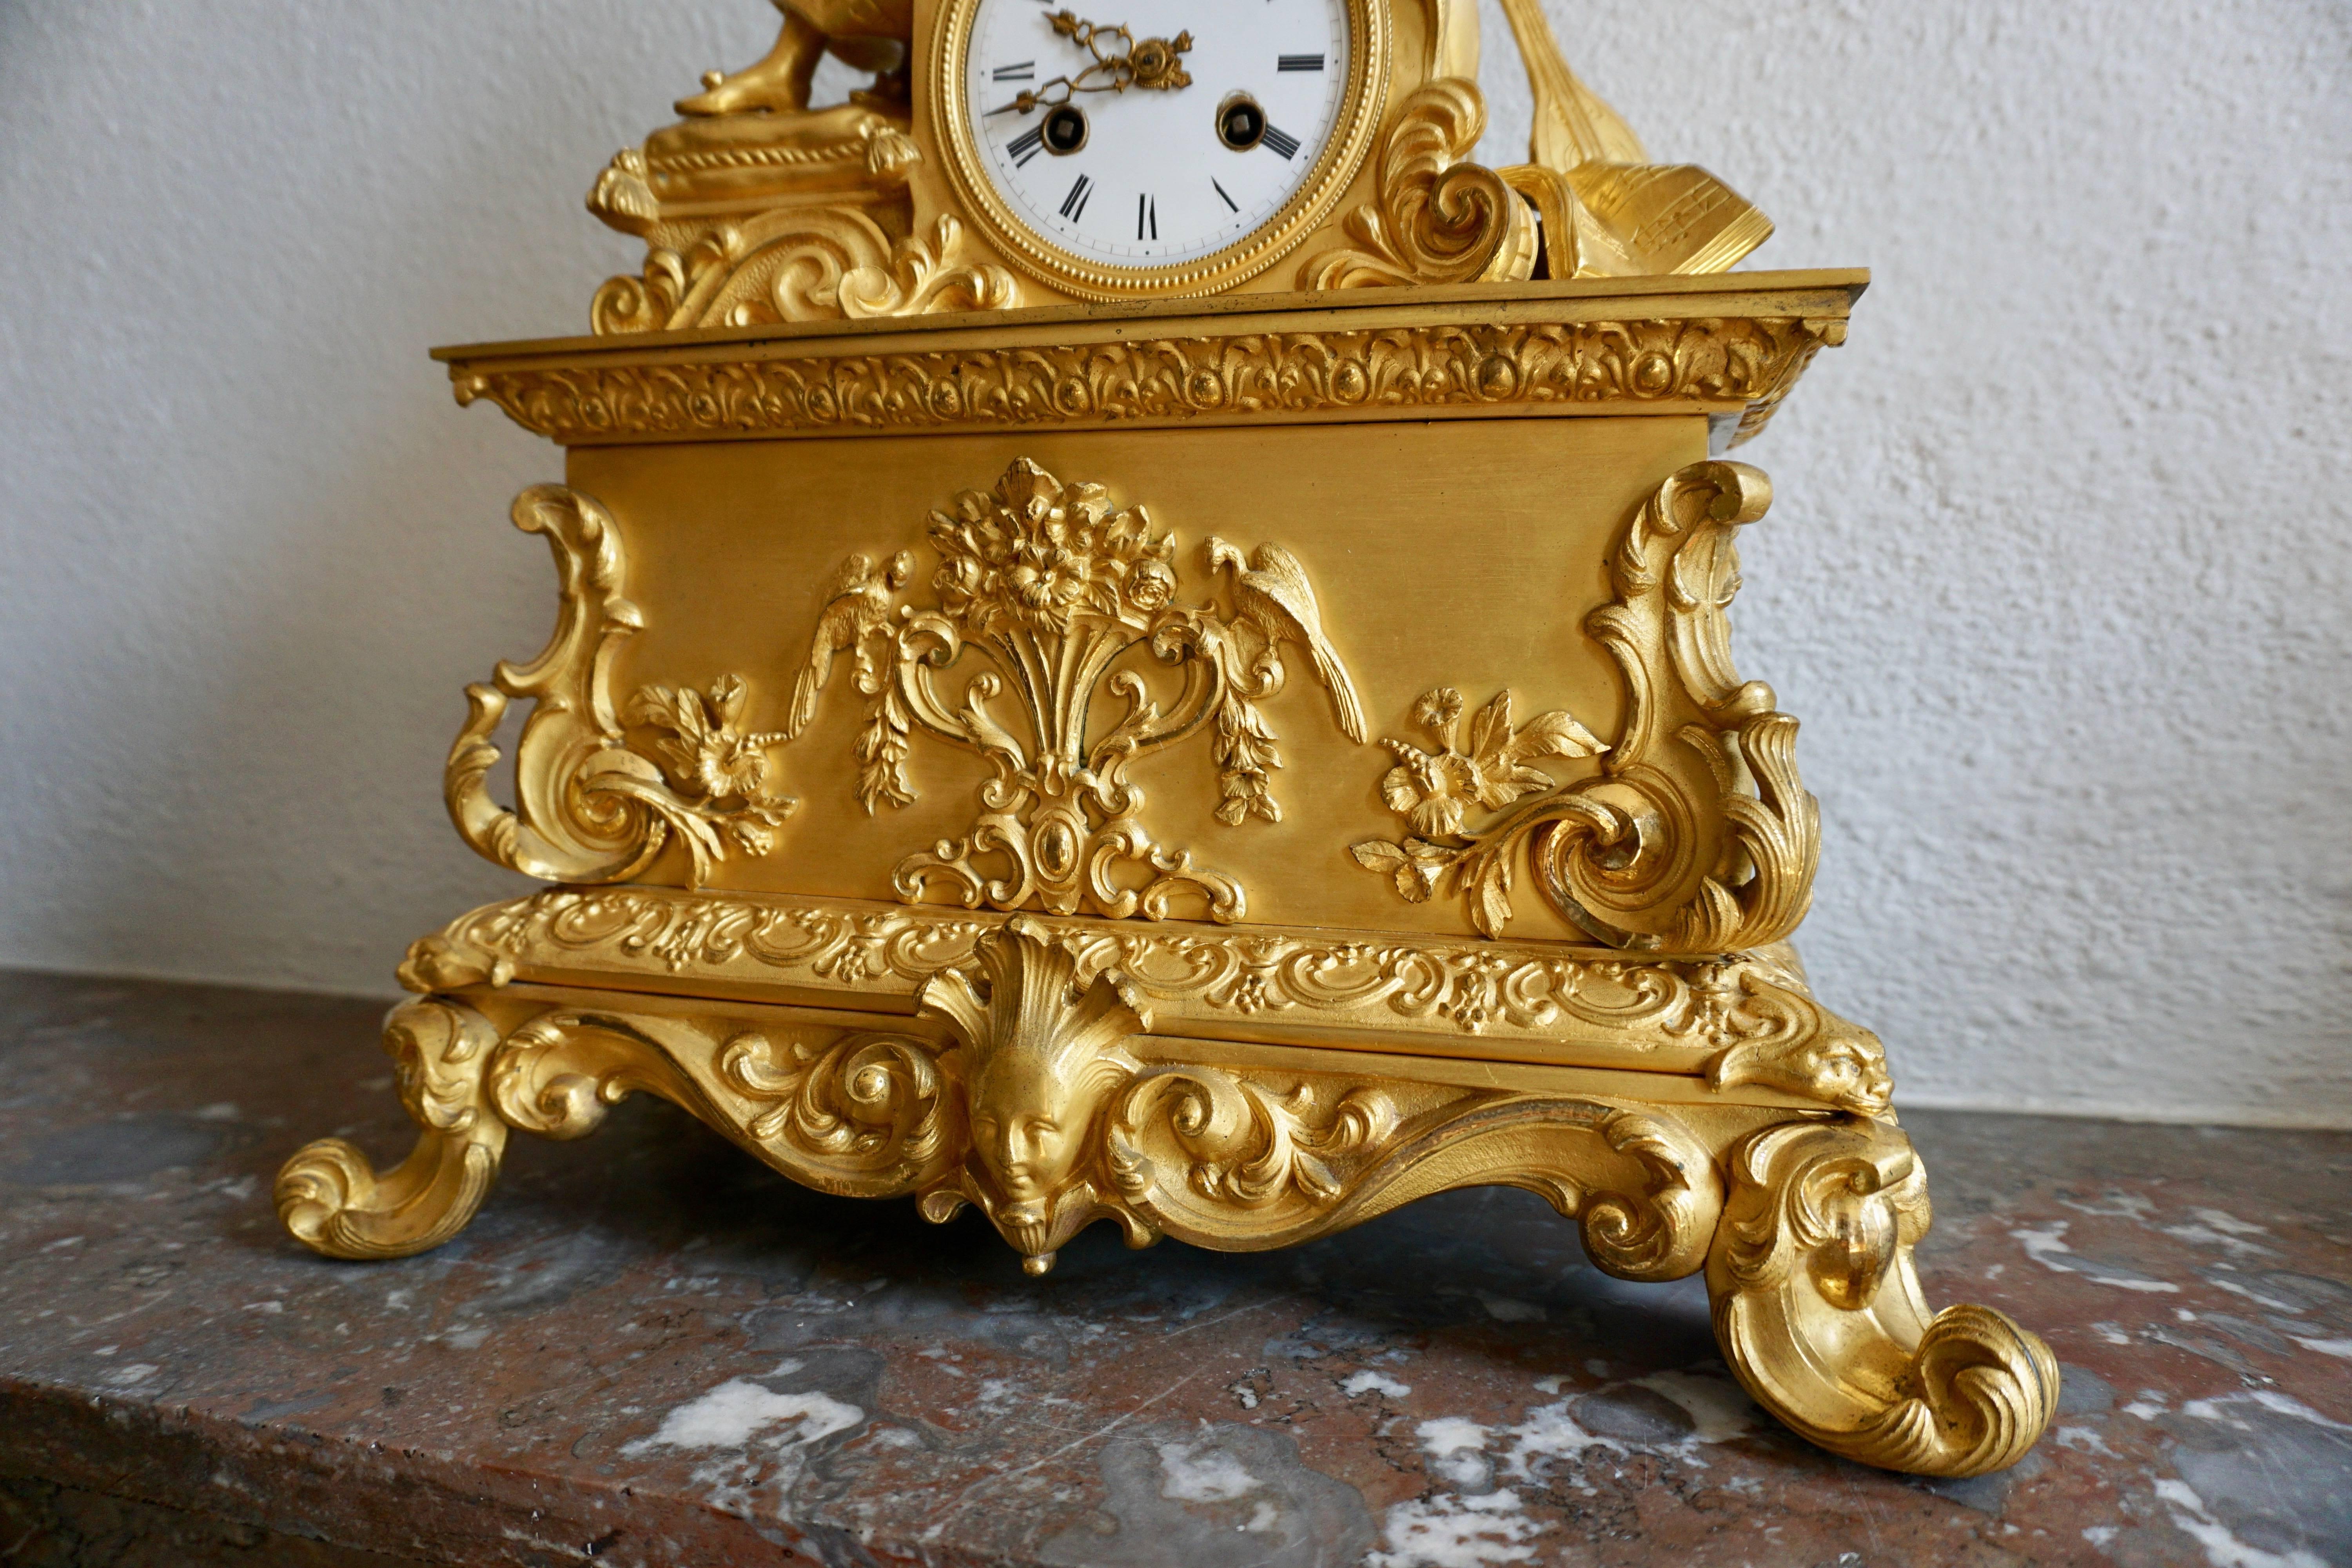 Very Fine and Elegant Fire, Gilt Bronze Mantle Clock in the Romantic Taste 1